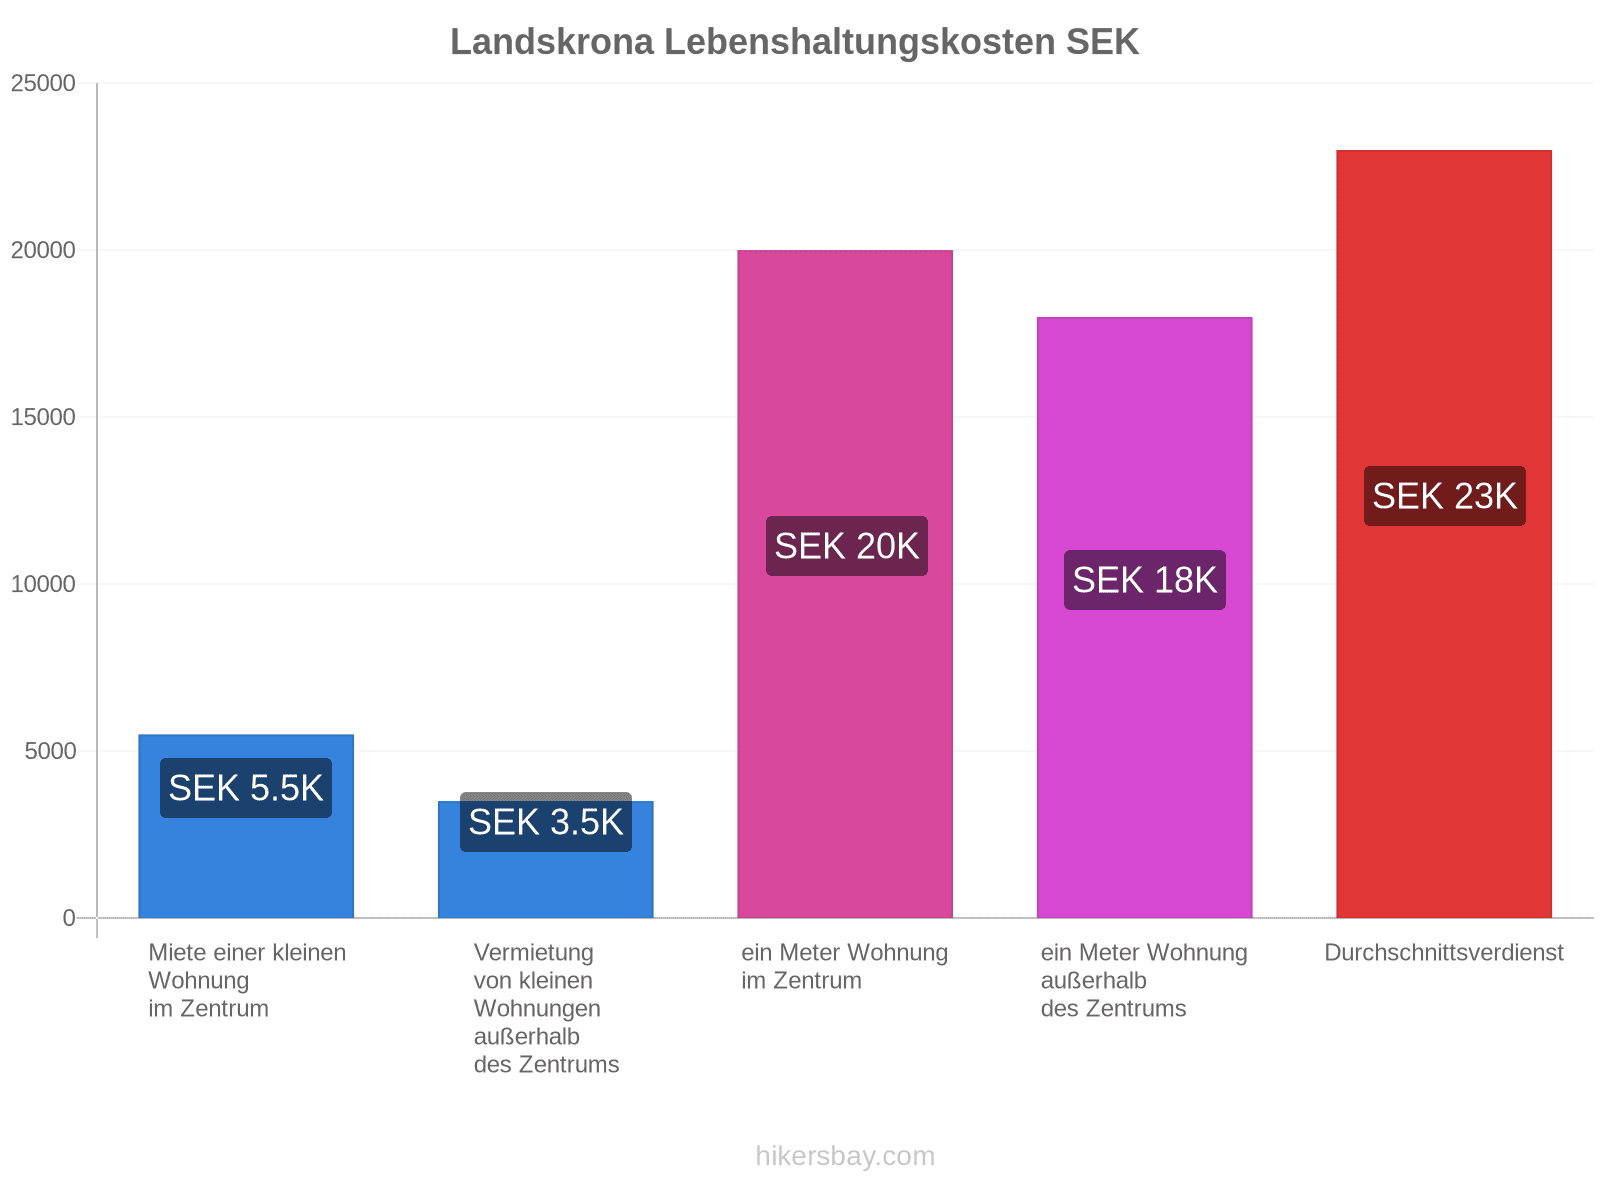 Landskrona Lebenshaltungskosten hikersbay.com